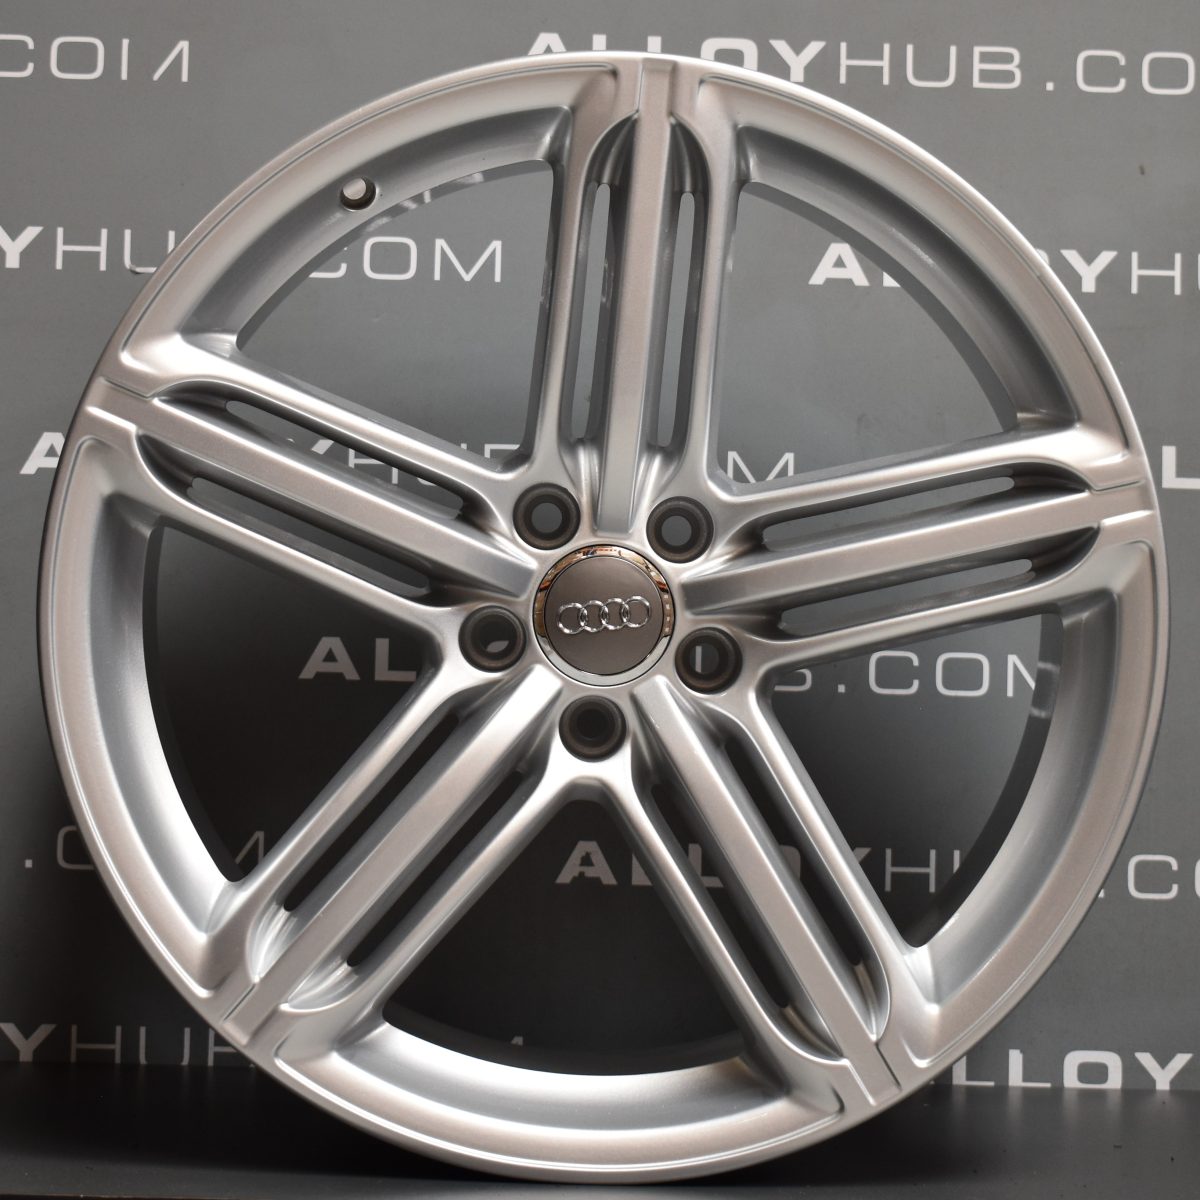 Genuine Audi A8 S8 4H 5 Segment Spoke 20" Inch Alloy Wheels with Silver Finish 4H0 601 025 T